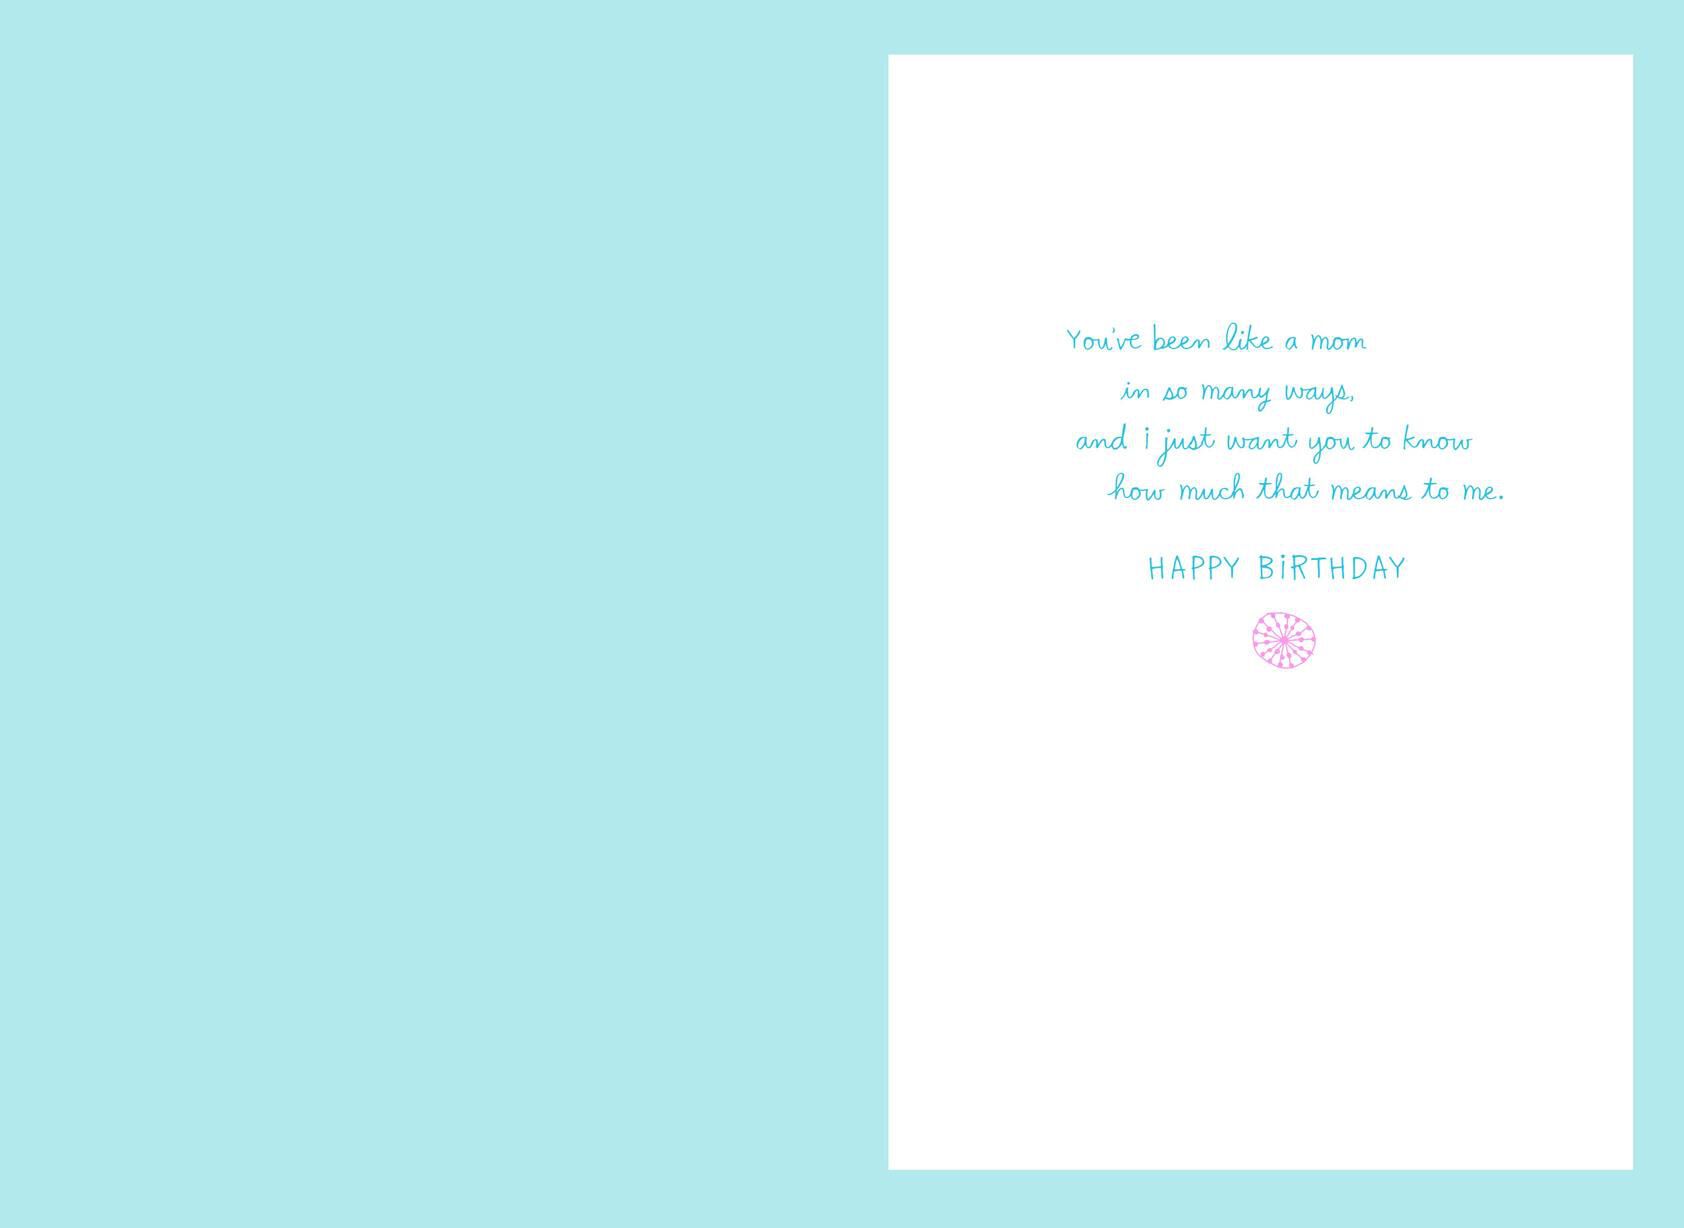 You're Like a Mom to Me Birthday Card - Greeting Cards - Hallmark